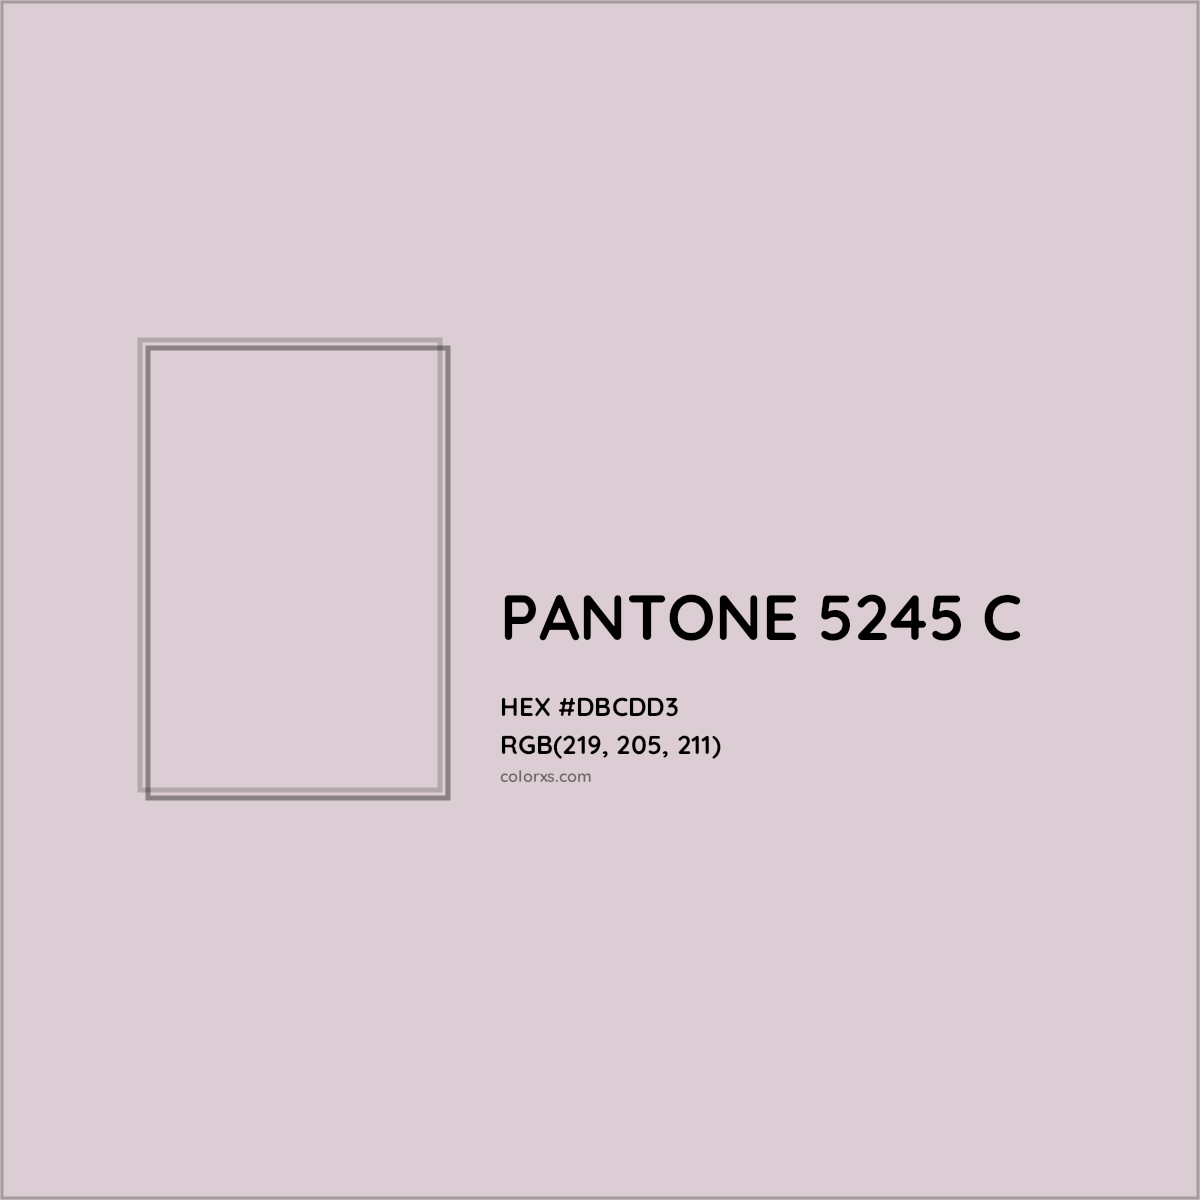 HEX #DBCDD3 PANTONE 5245 C CMS Pantone PMS - Color Code